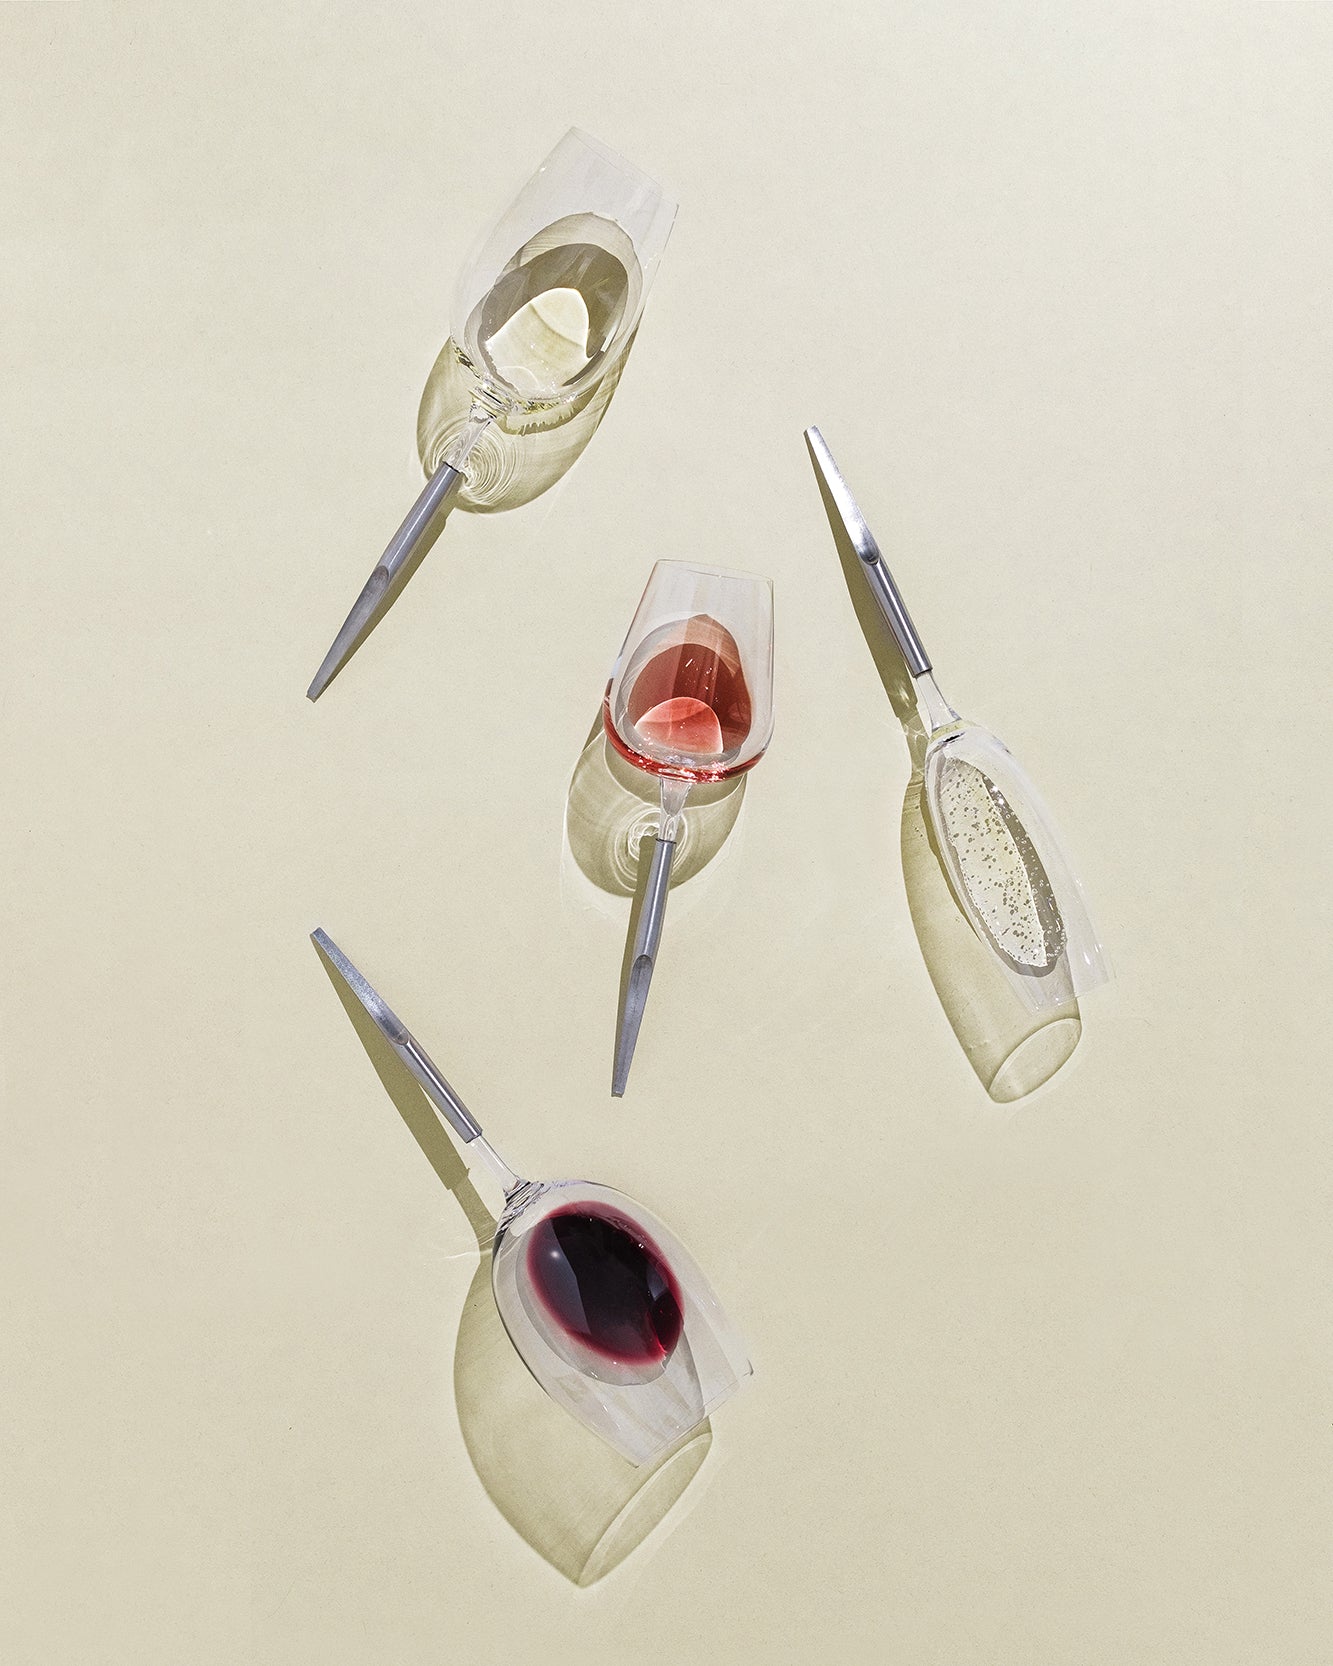 Best picnic wine glasses 2022: Plastic and metal designs